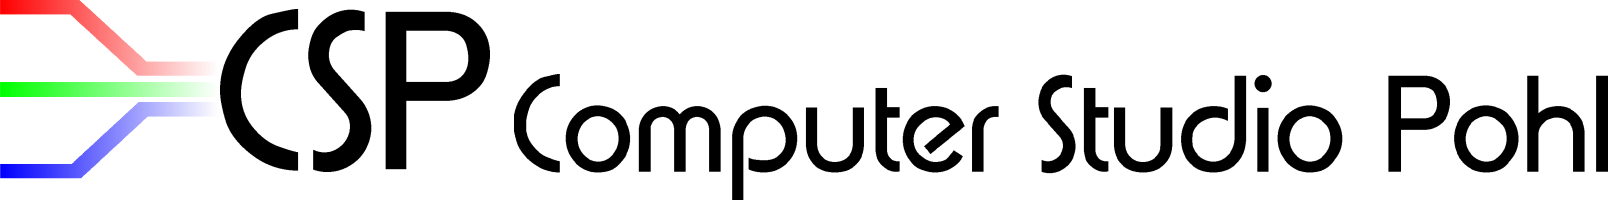 CSP Computer Studio Pohl - Logo